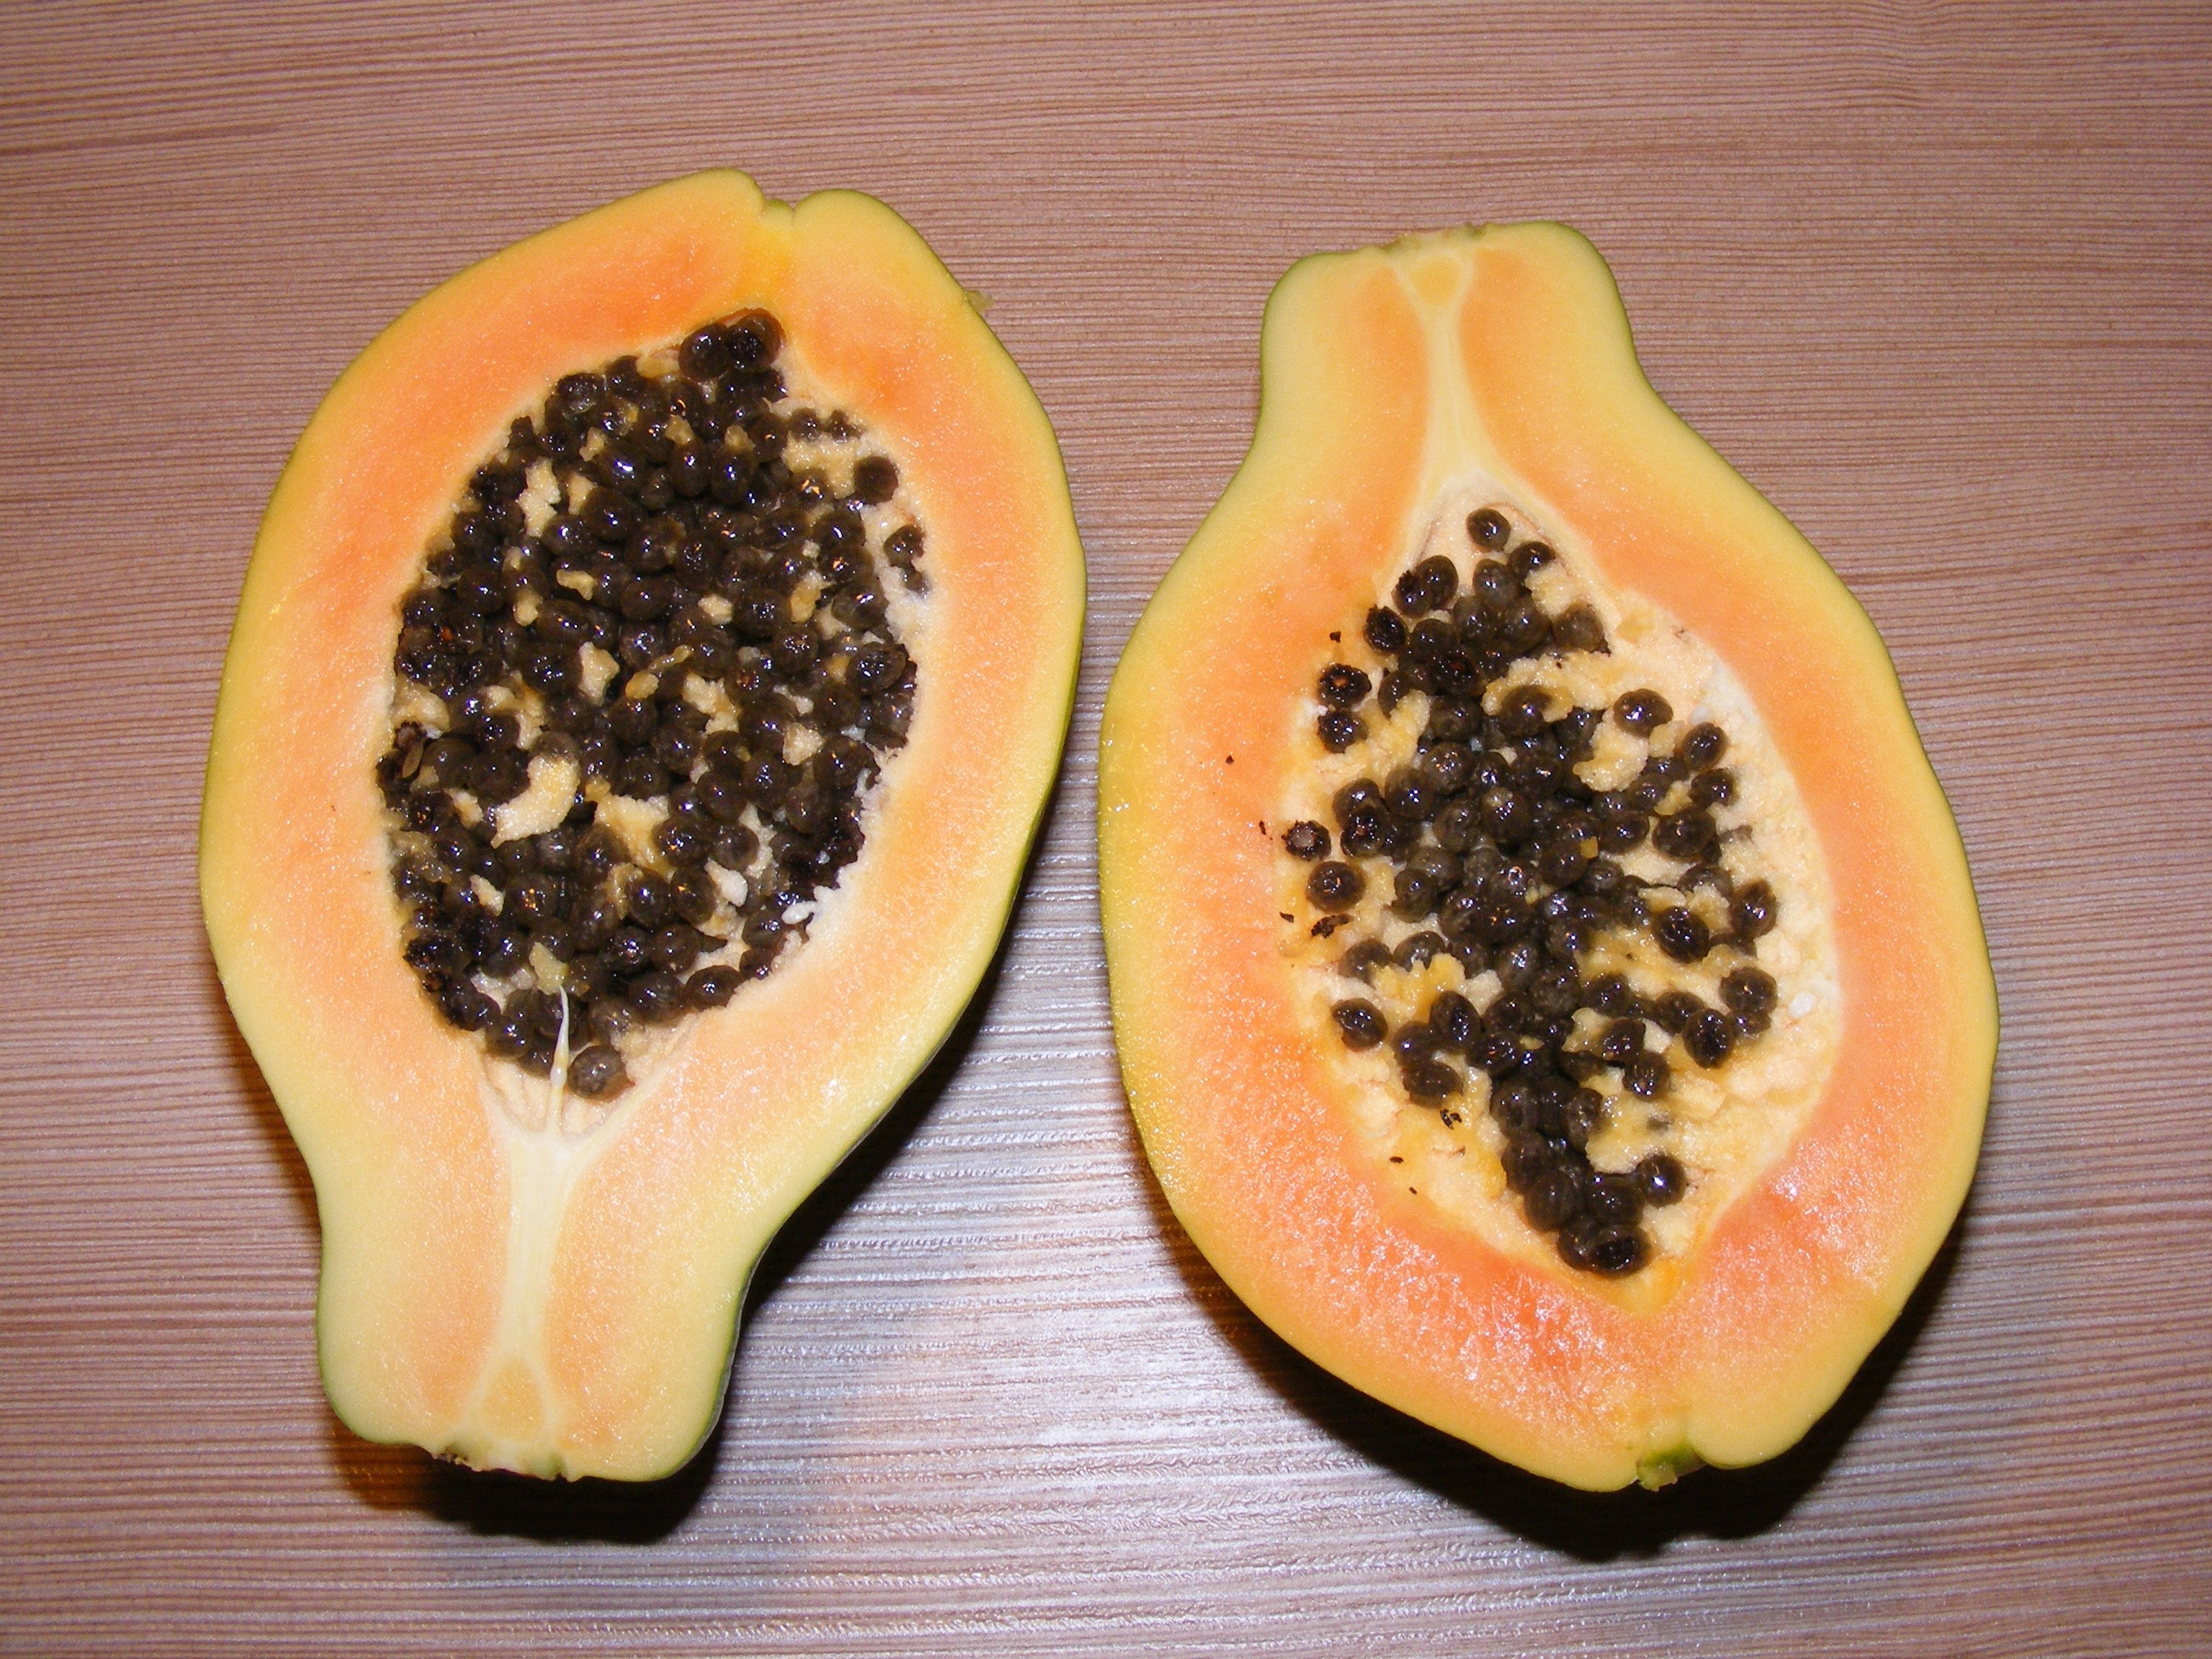 yellow and orange papaya